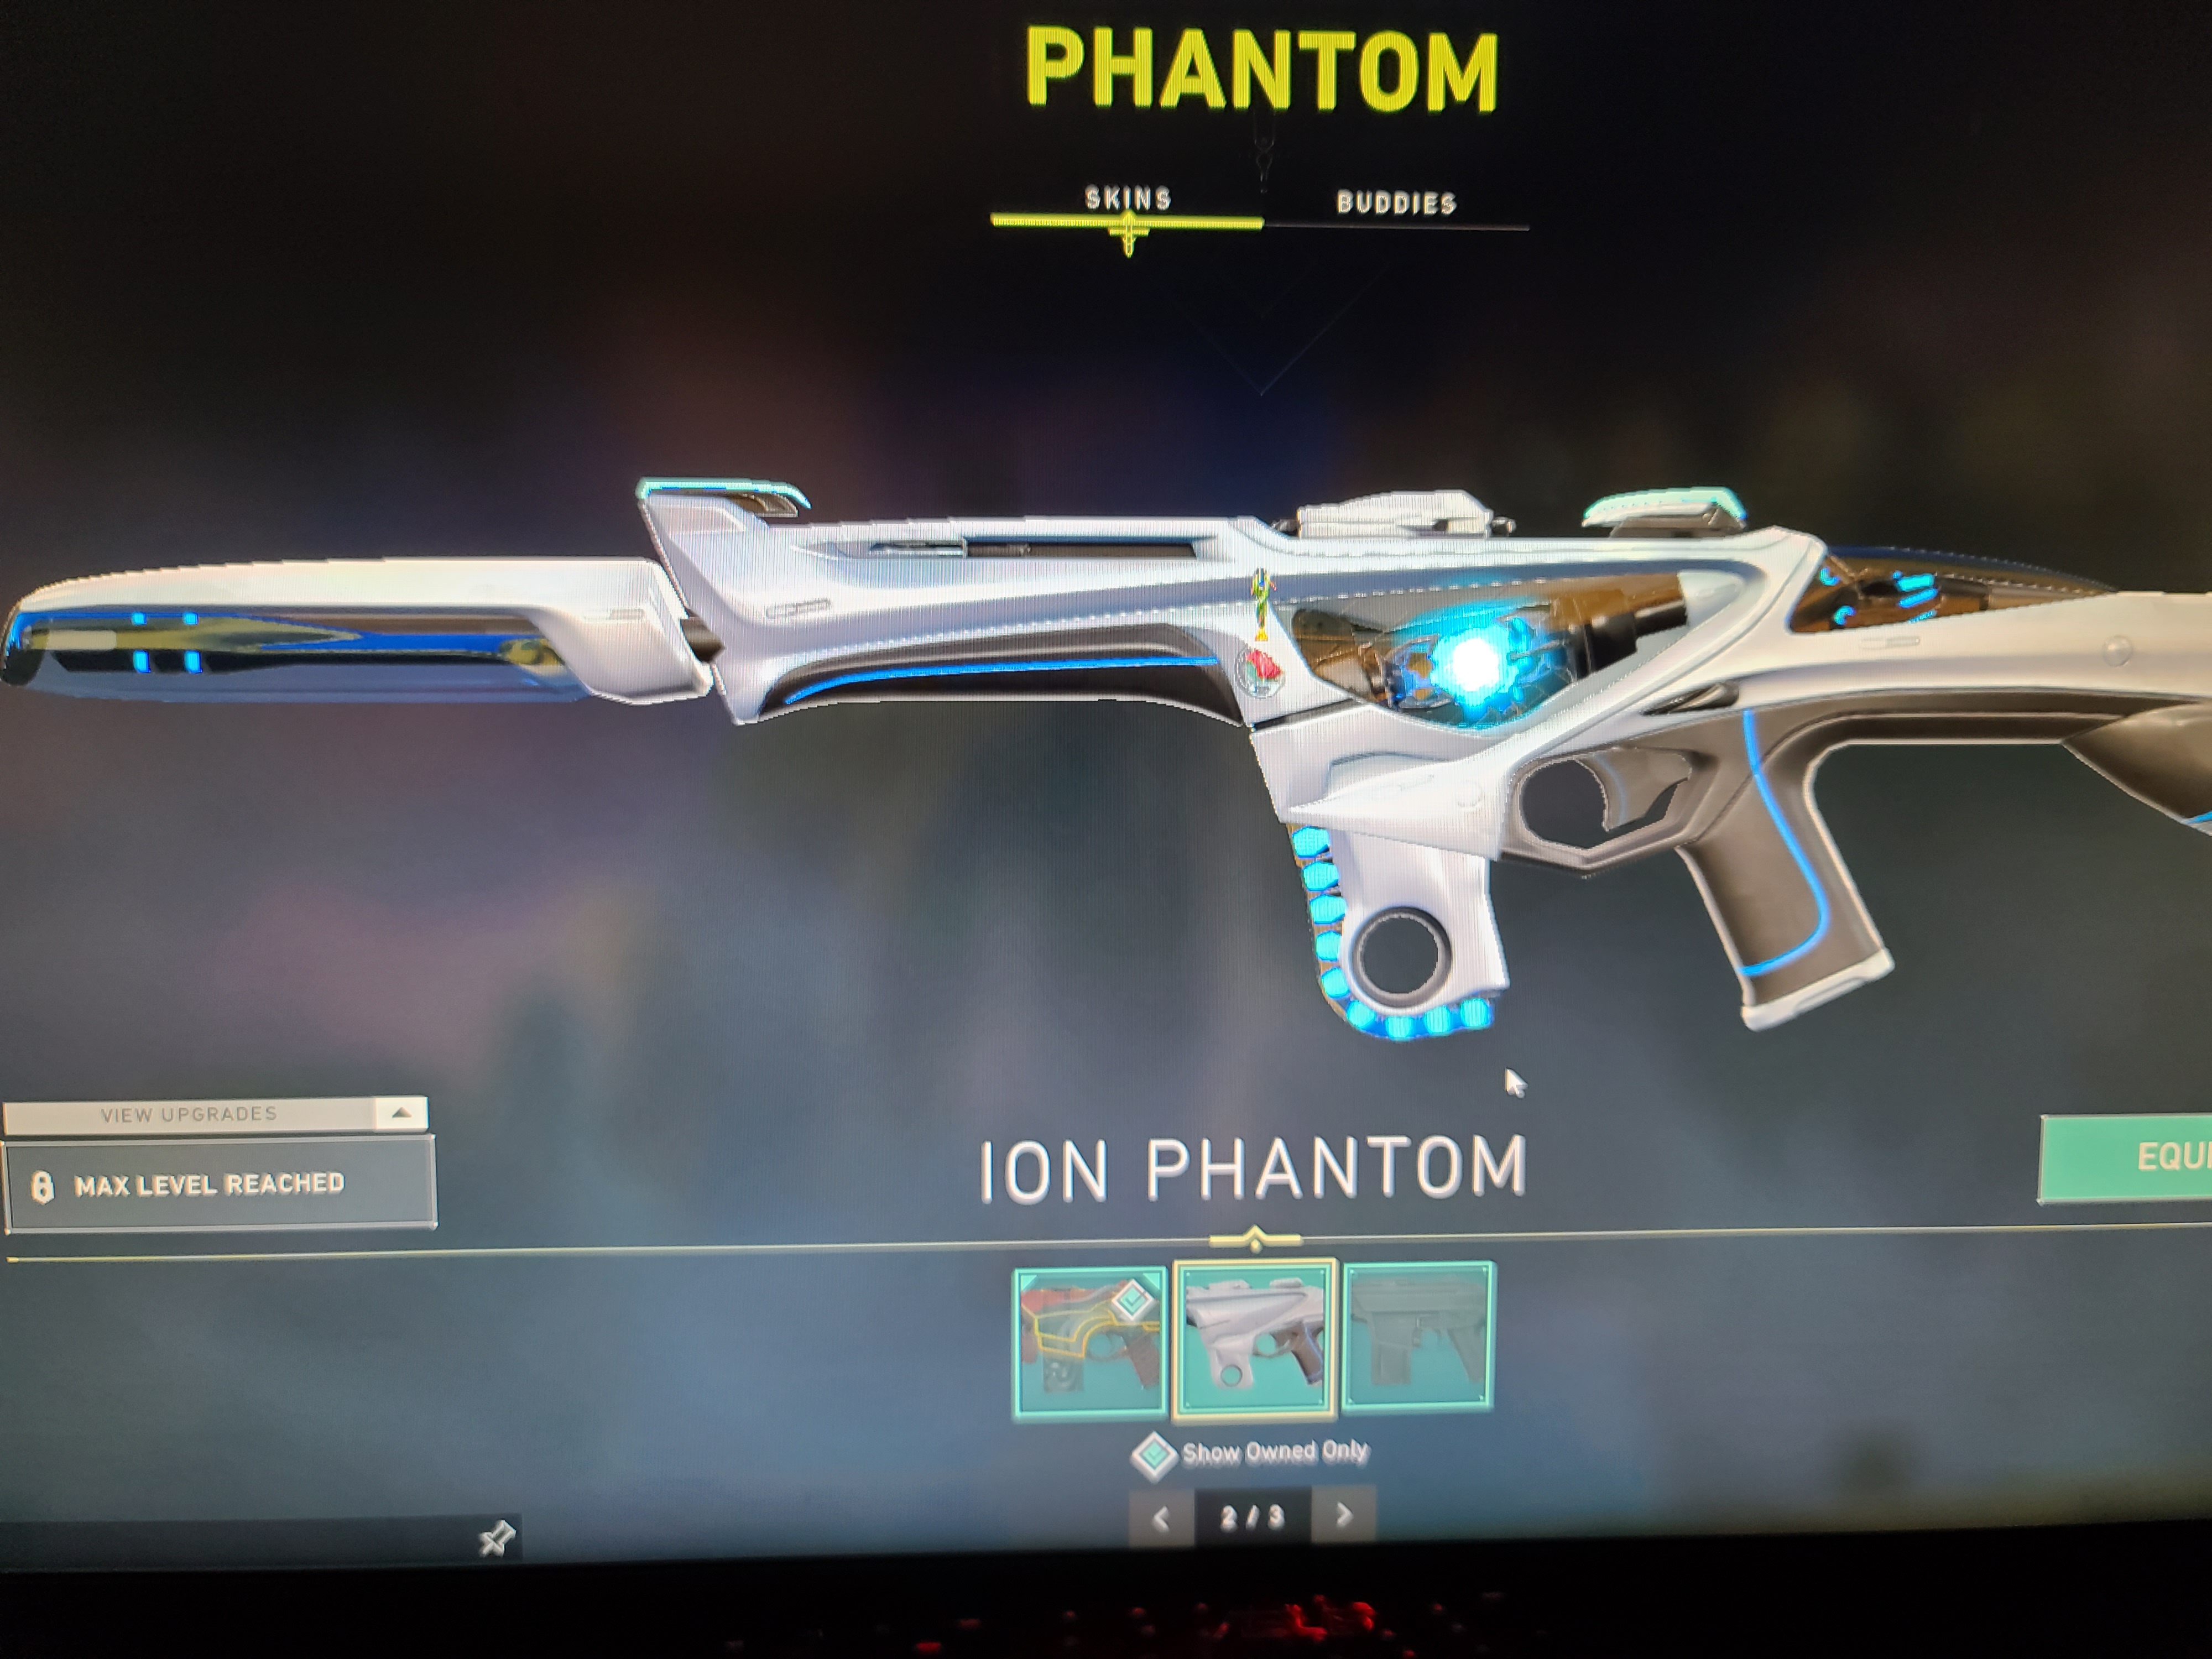 Ion phantom